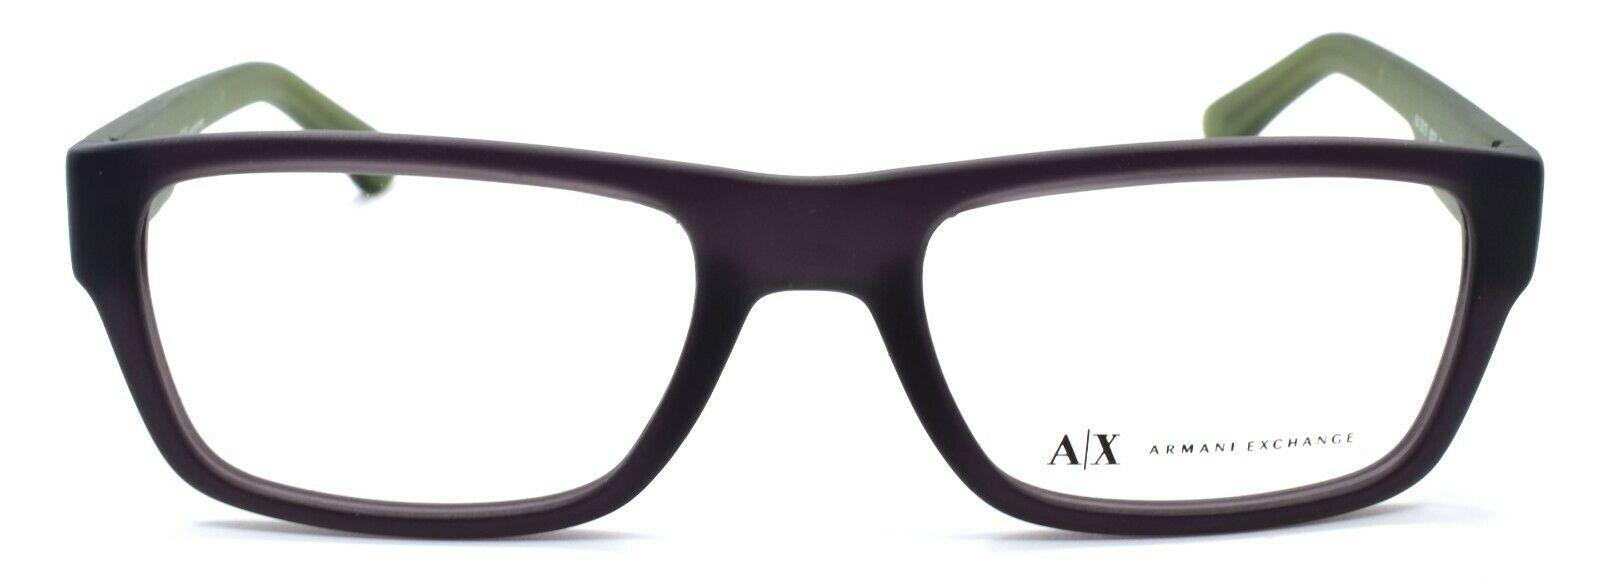 2-Armani Exchange AX3015 8020 Eyeglasses Frames 52-18-140 Matte Black / Green-8053672207347-IKSpecs